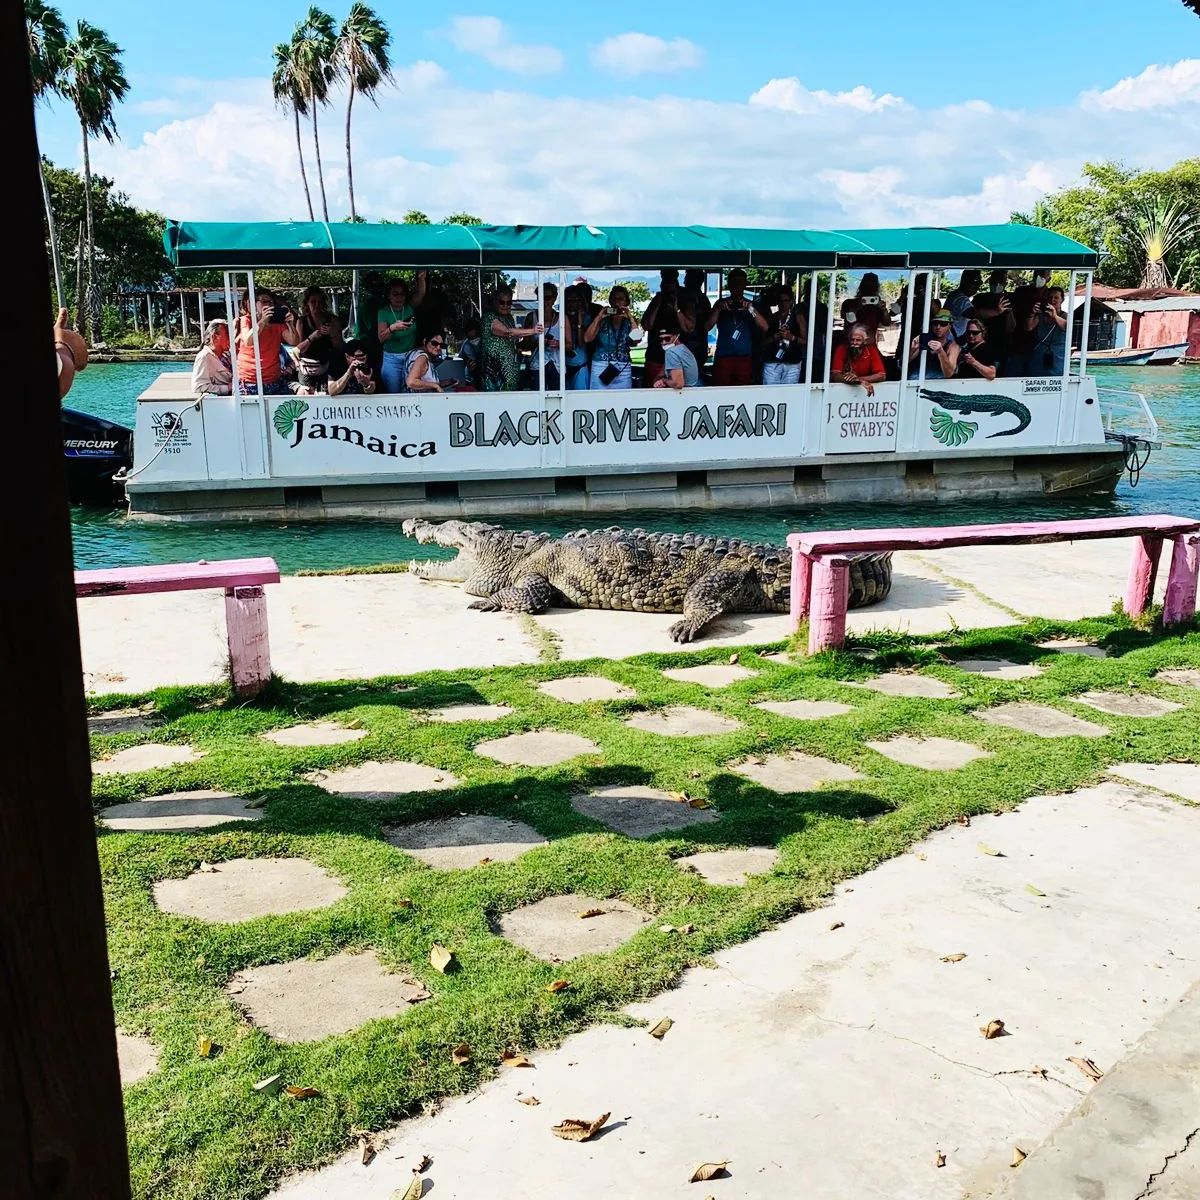 Black River Safari Boat Tour - Can't-Miss Tourist Attractions in Jamaica